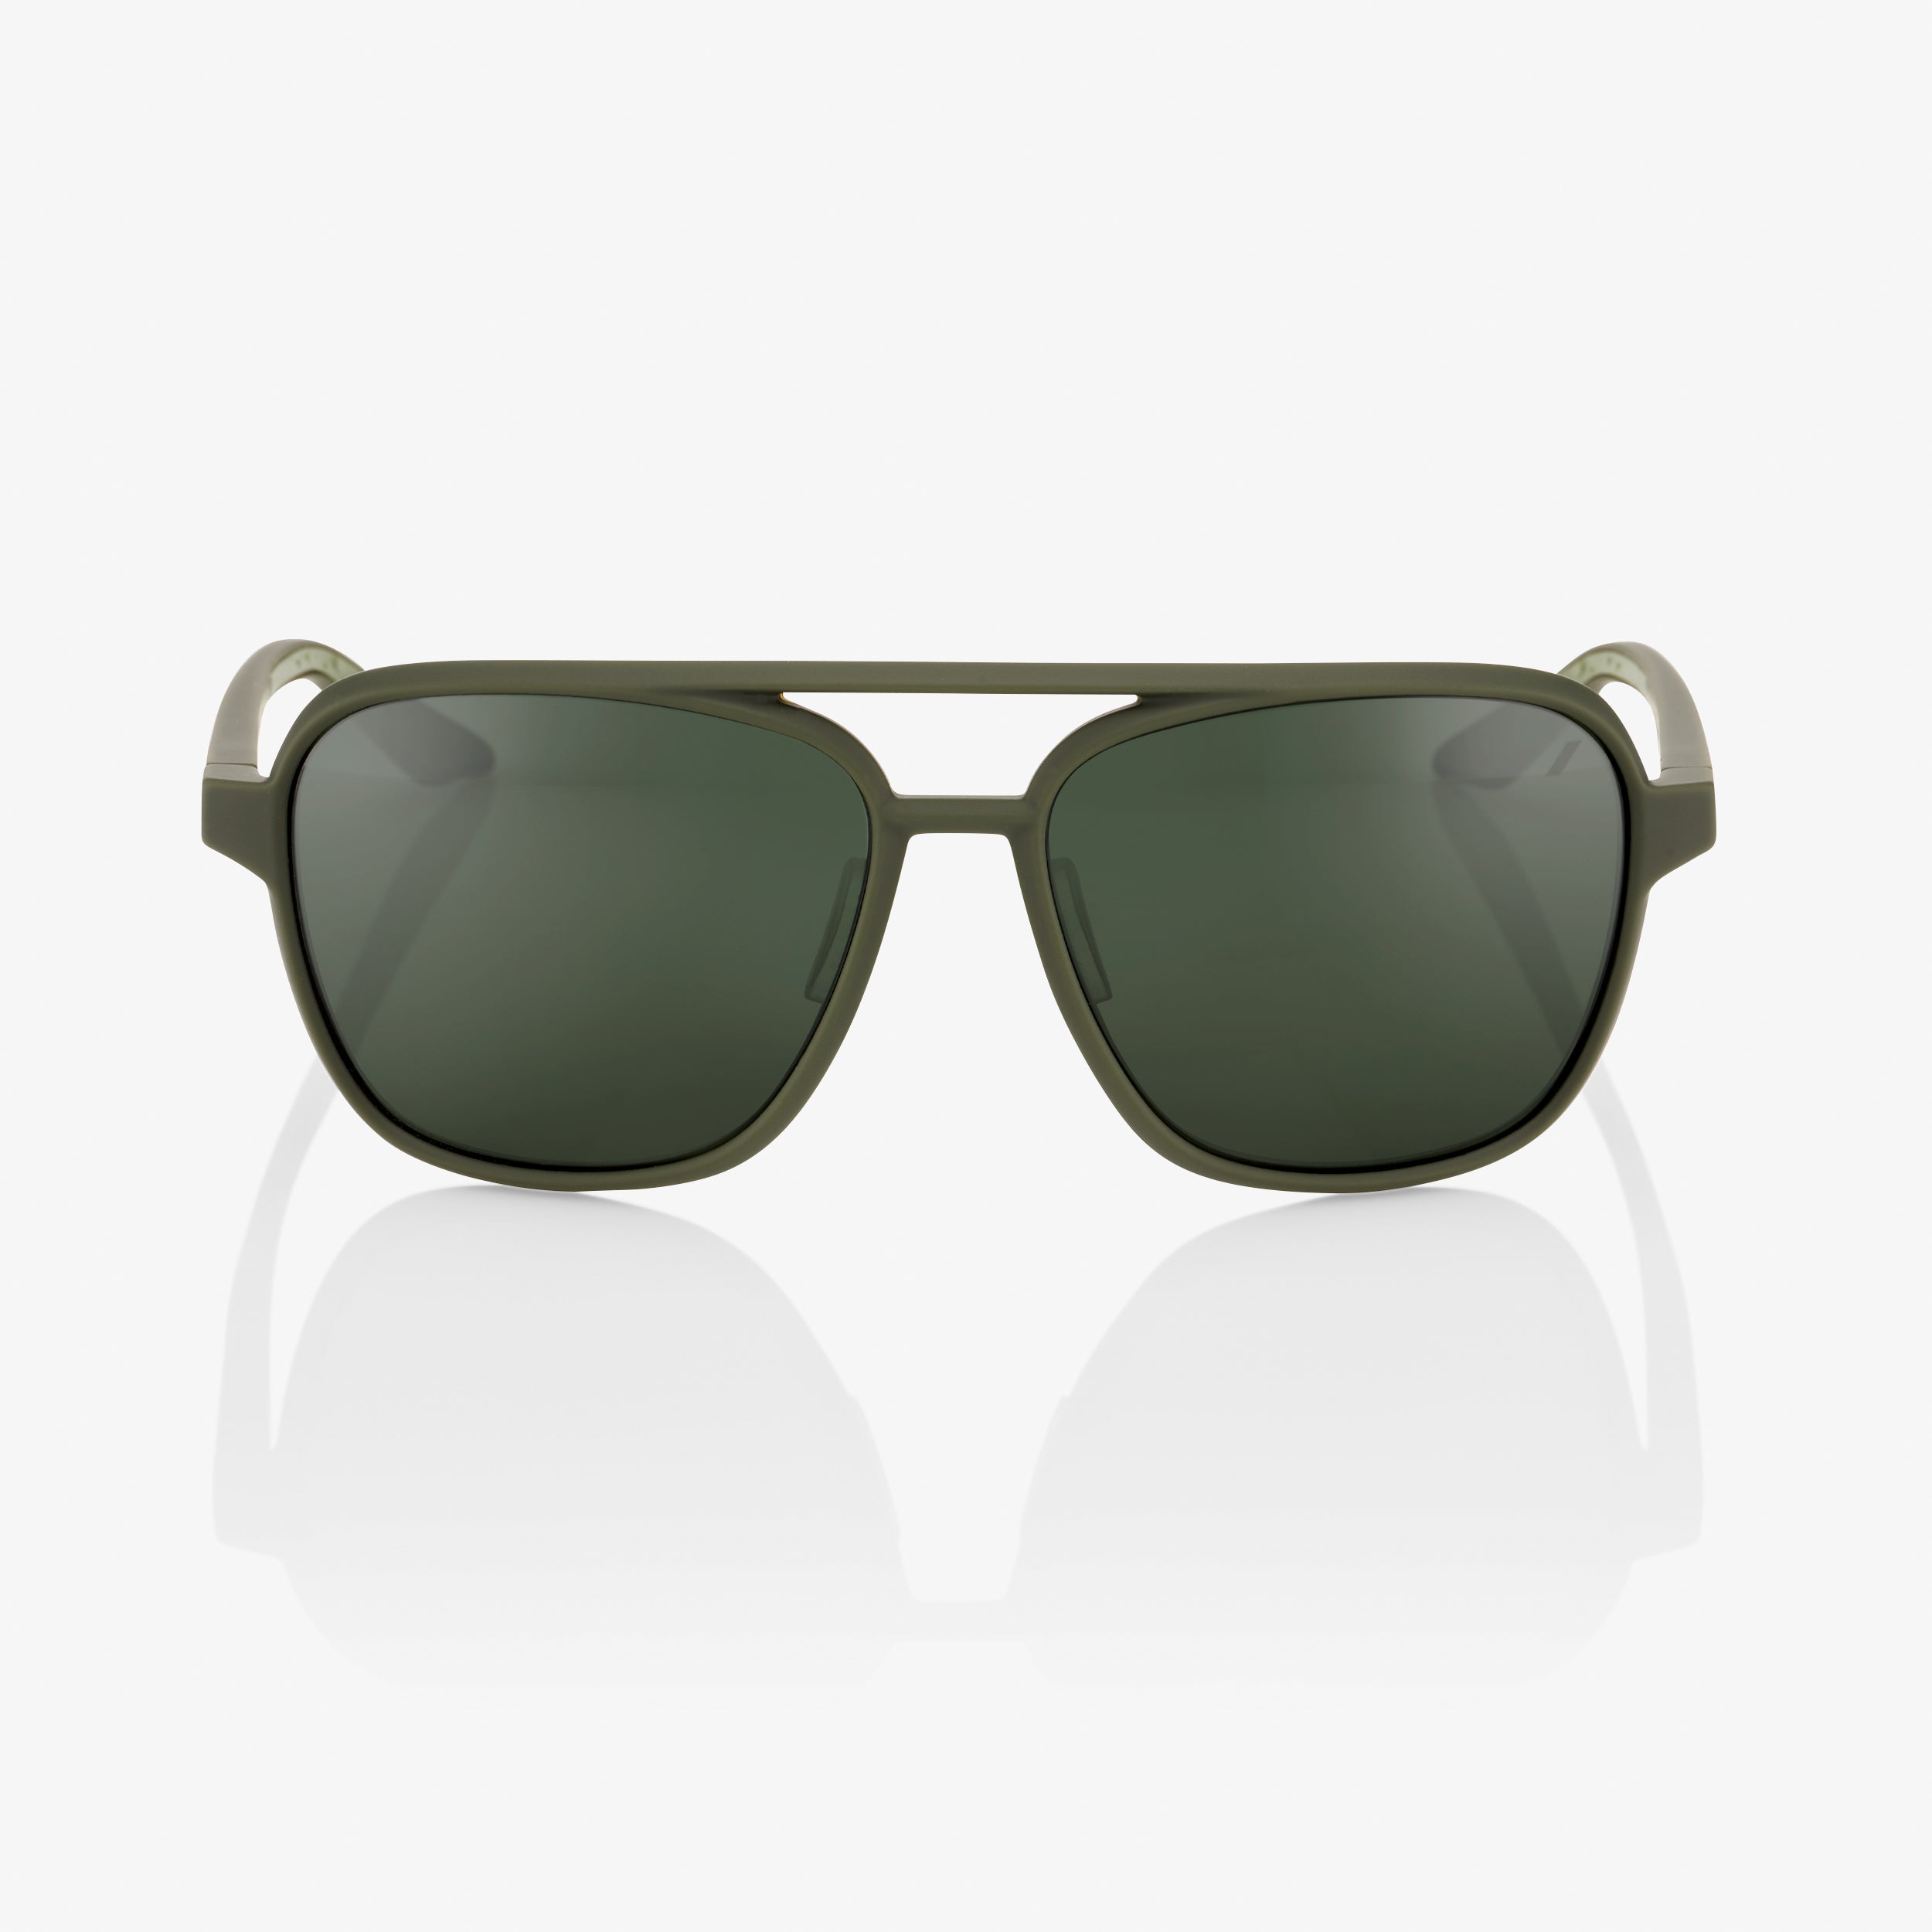 KASIA - Soft Tact Army Green - Grey Green Lens